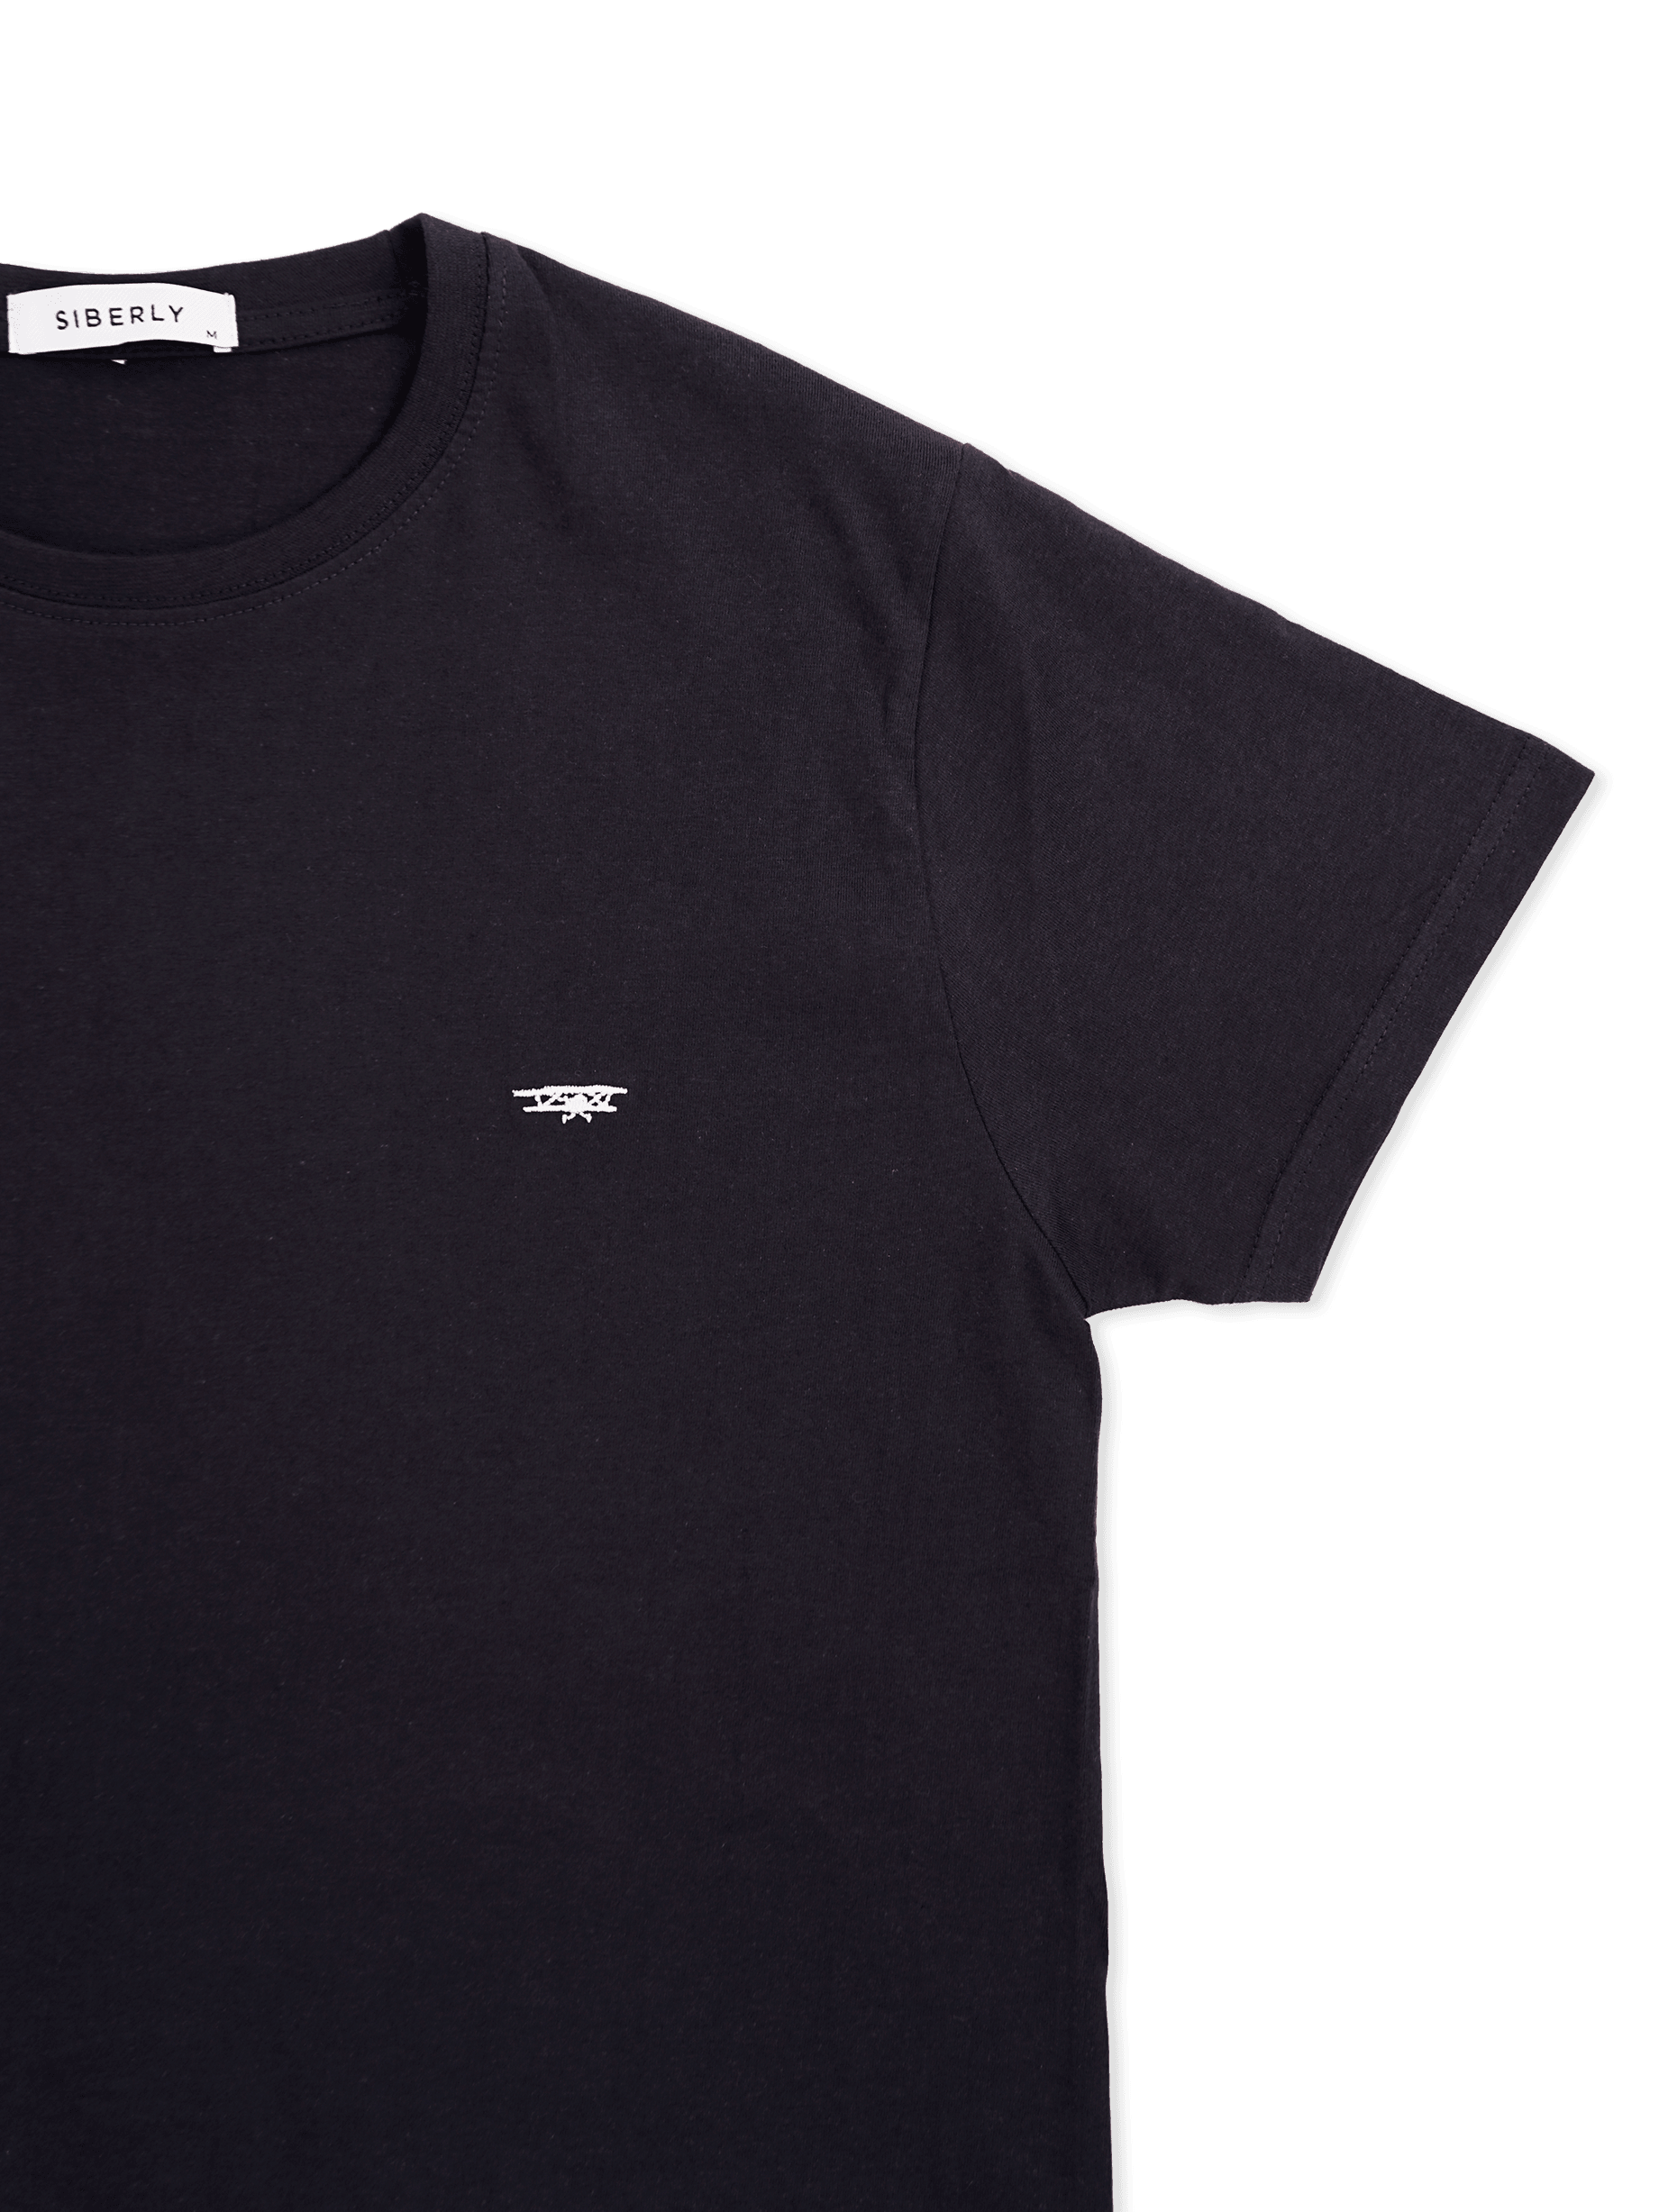 Camiseta logo bordado marino - SIBERLY